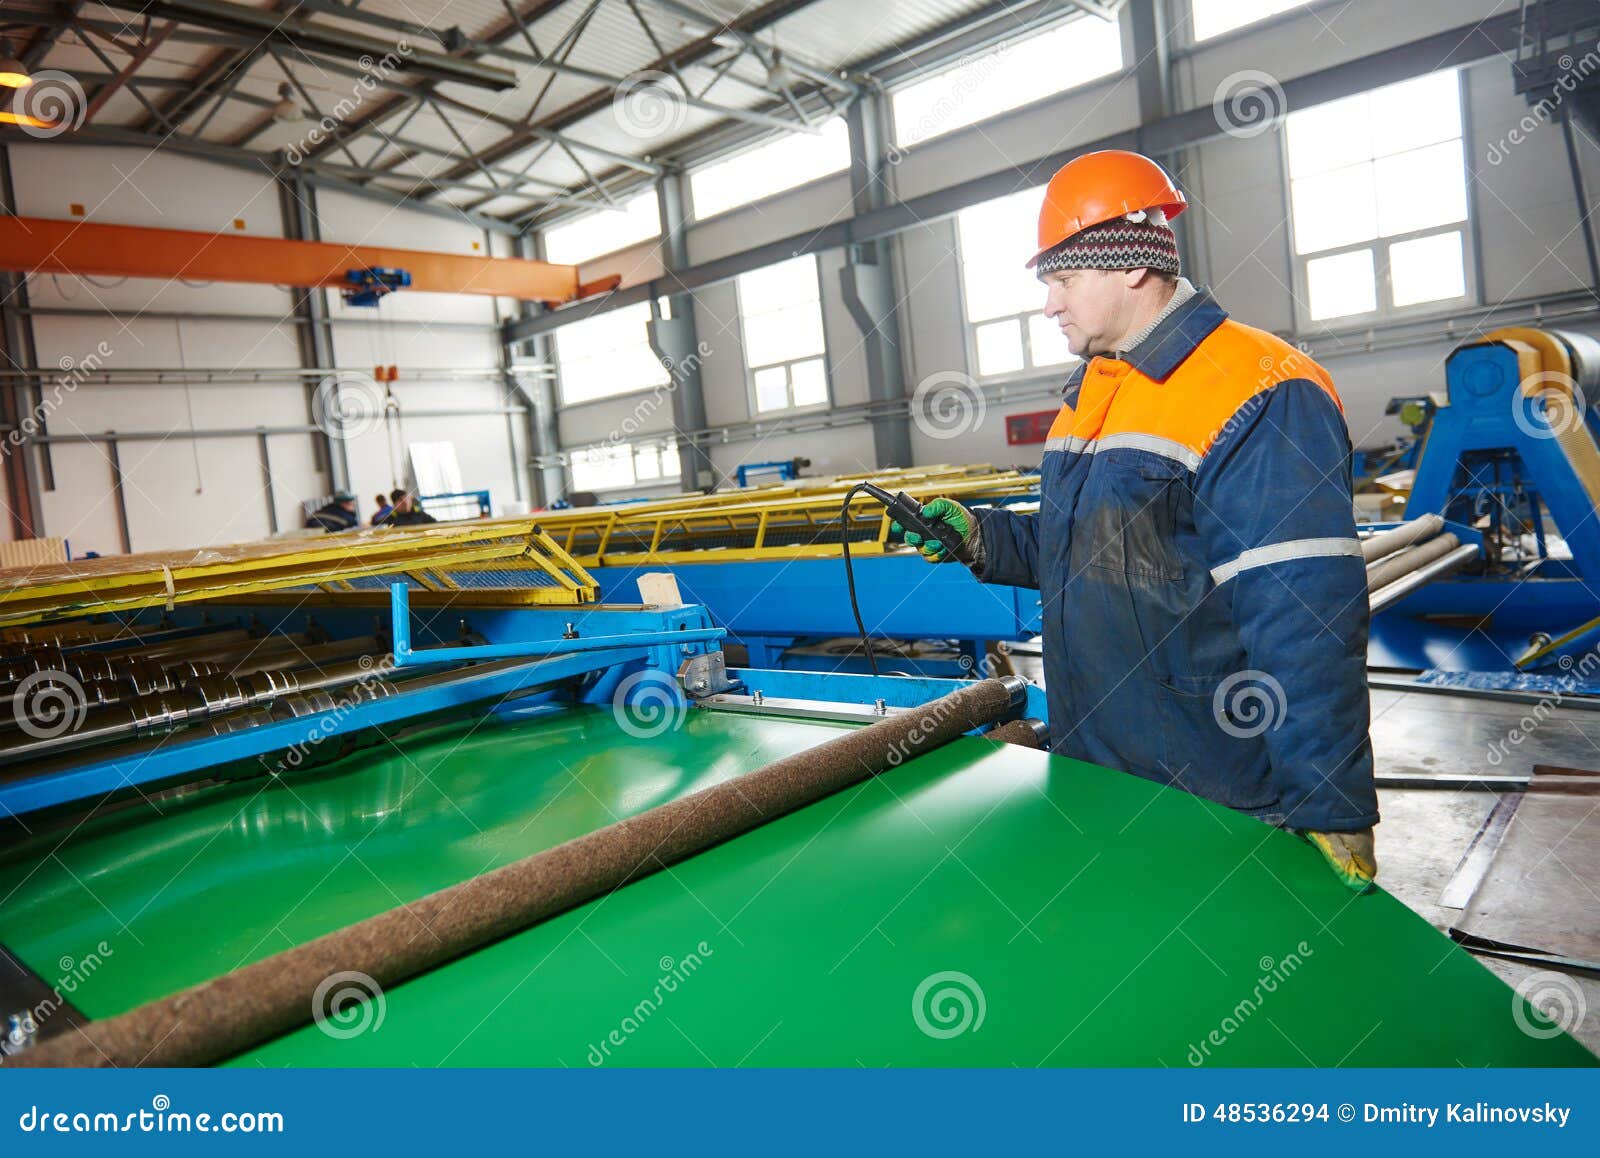 worker at metal sheet profiling factory